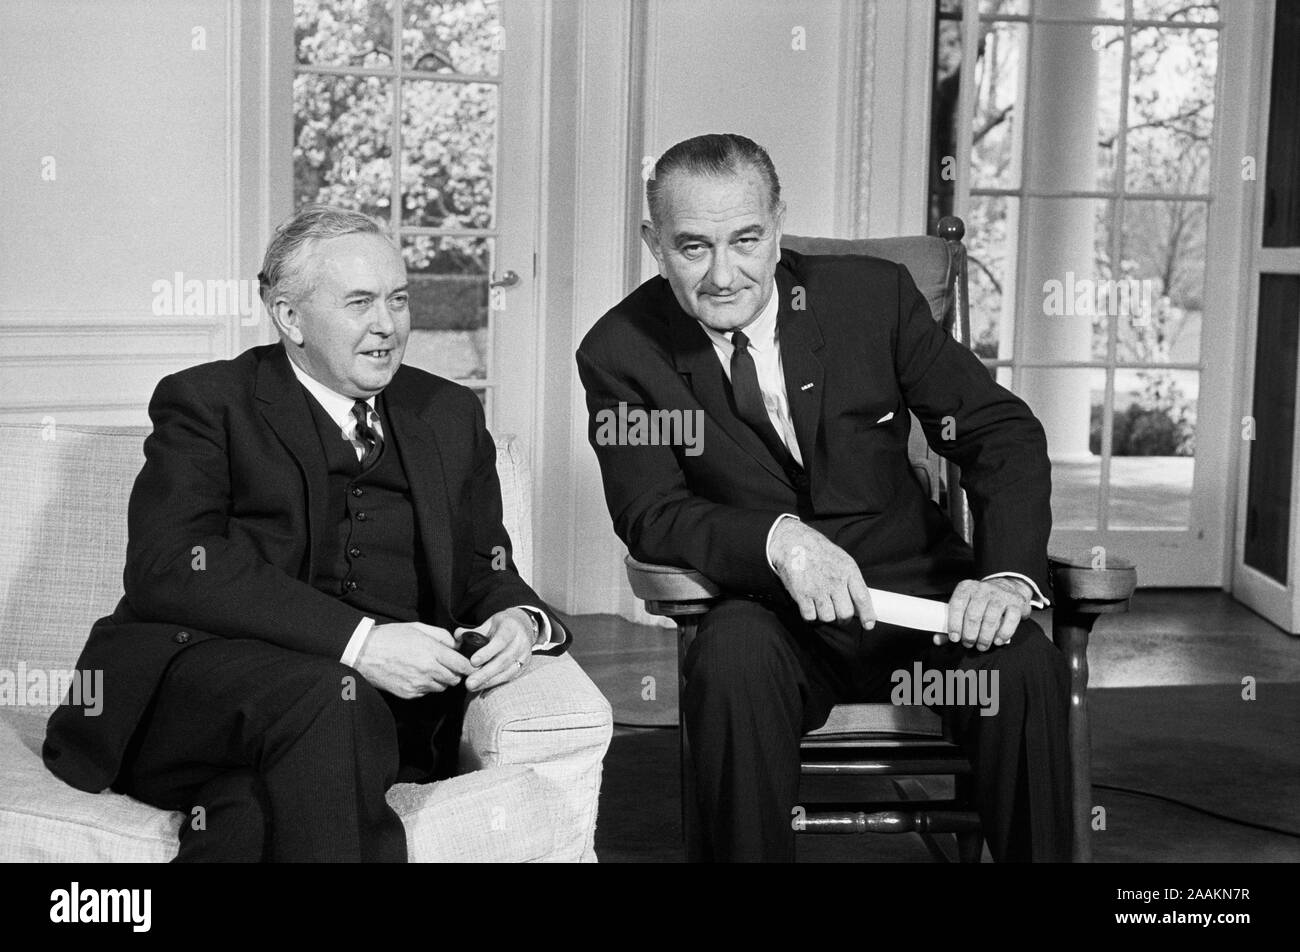 Us-Präsident Lyndon Johnson Treffen mit der britische Premierminister Harold Wilson, White House, Washington, D.C., USA, Foto: Marion S. Trikosko, 15. April 1965 Stockfoto